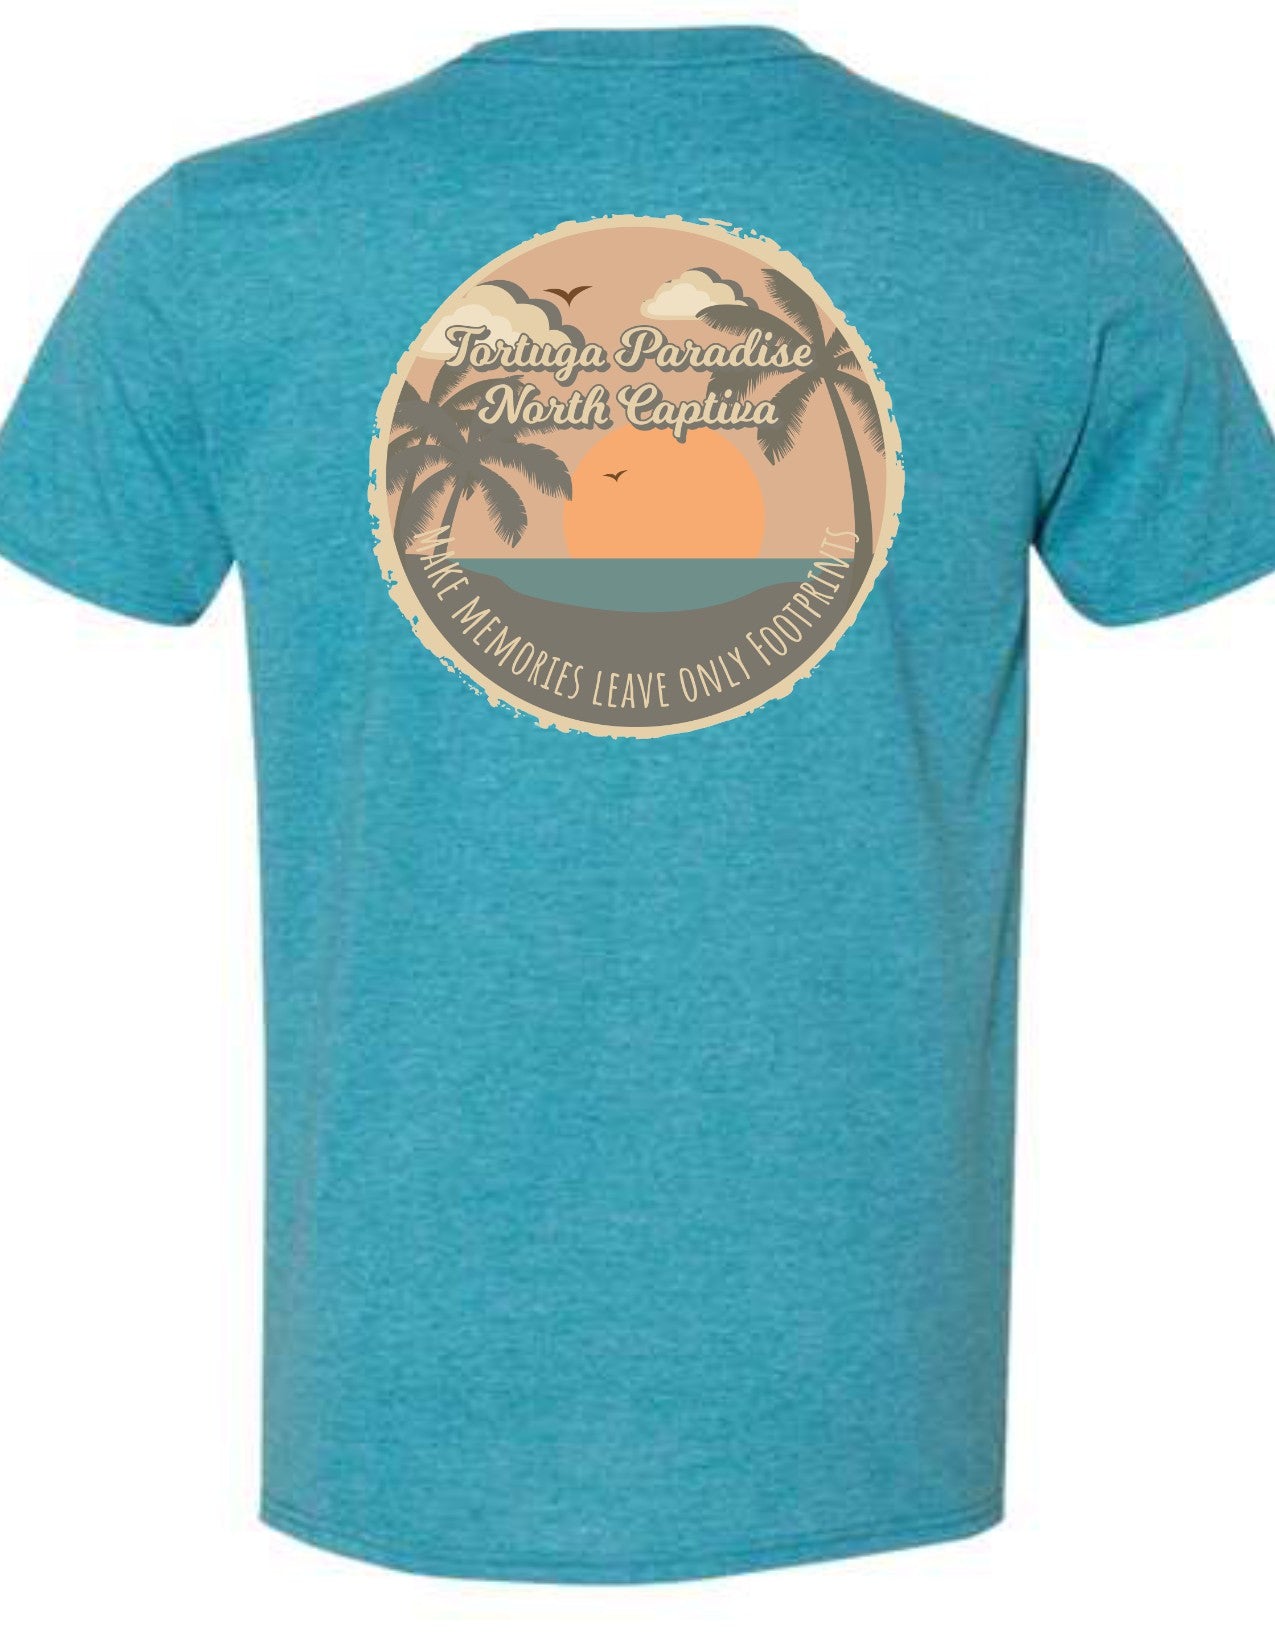 Tortuga Short Sleeve Adult T-Shirt Galapagos Blue